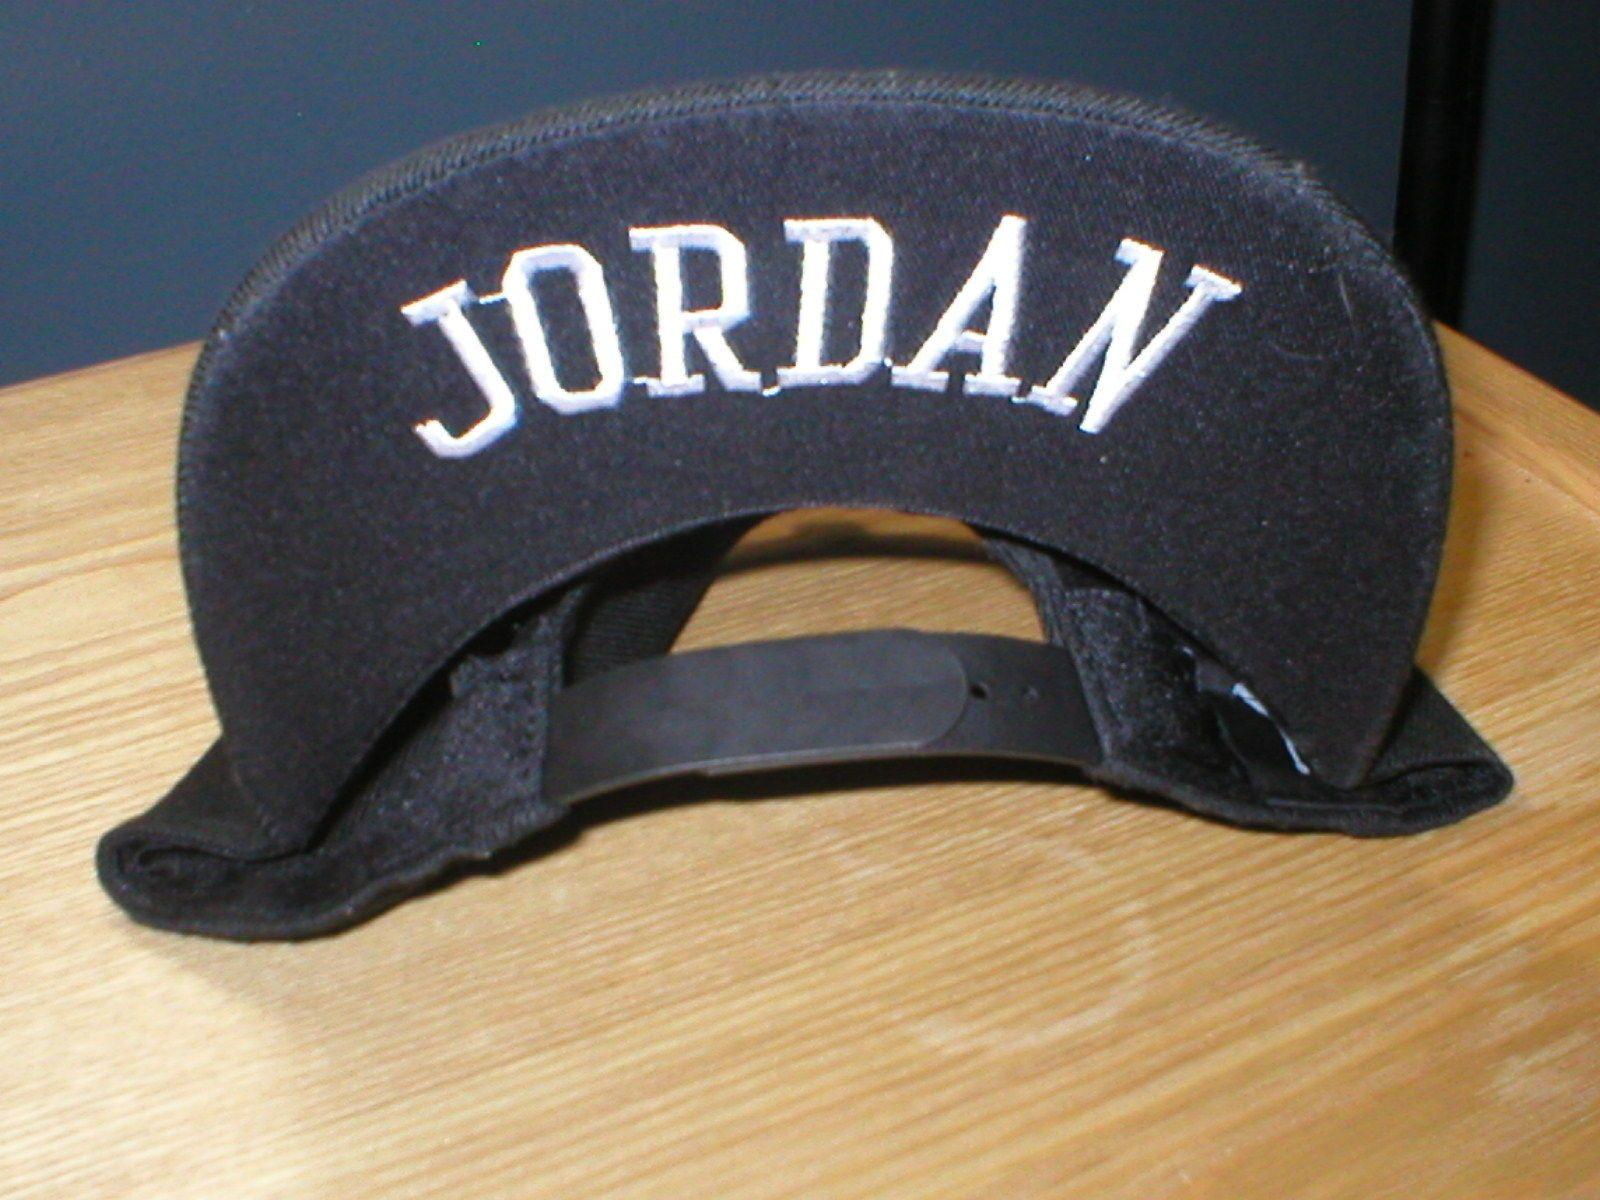 Awesome Jordan Logo - AIR JORDAN LOGO ALL BLACK HAT WITH LOGO JORDAN AND NAME UNDER